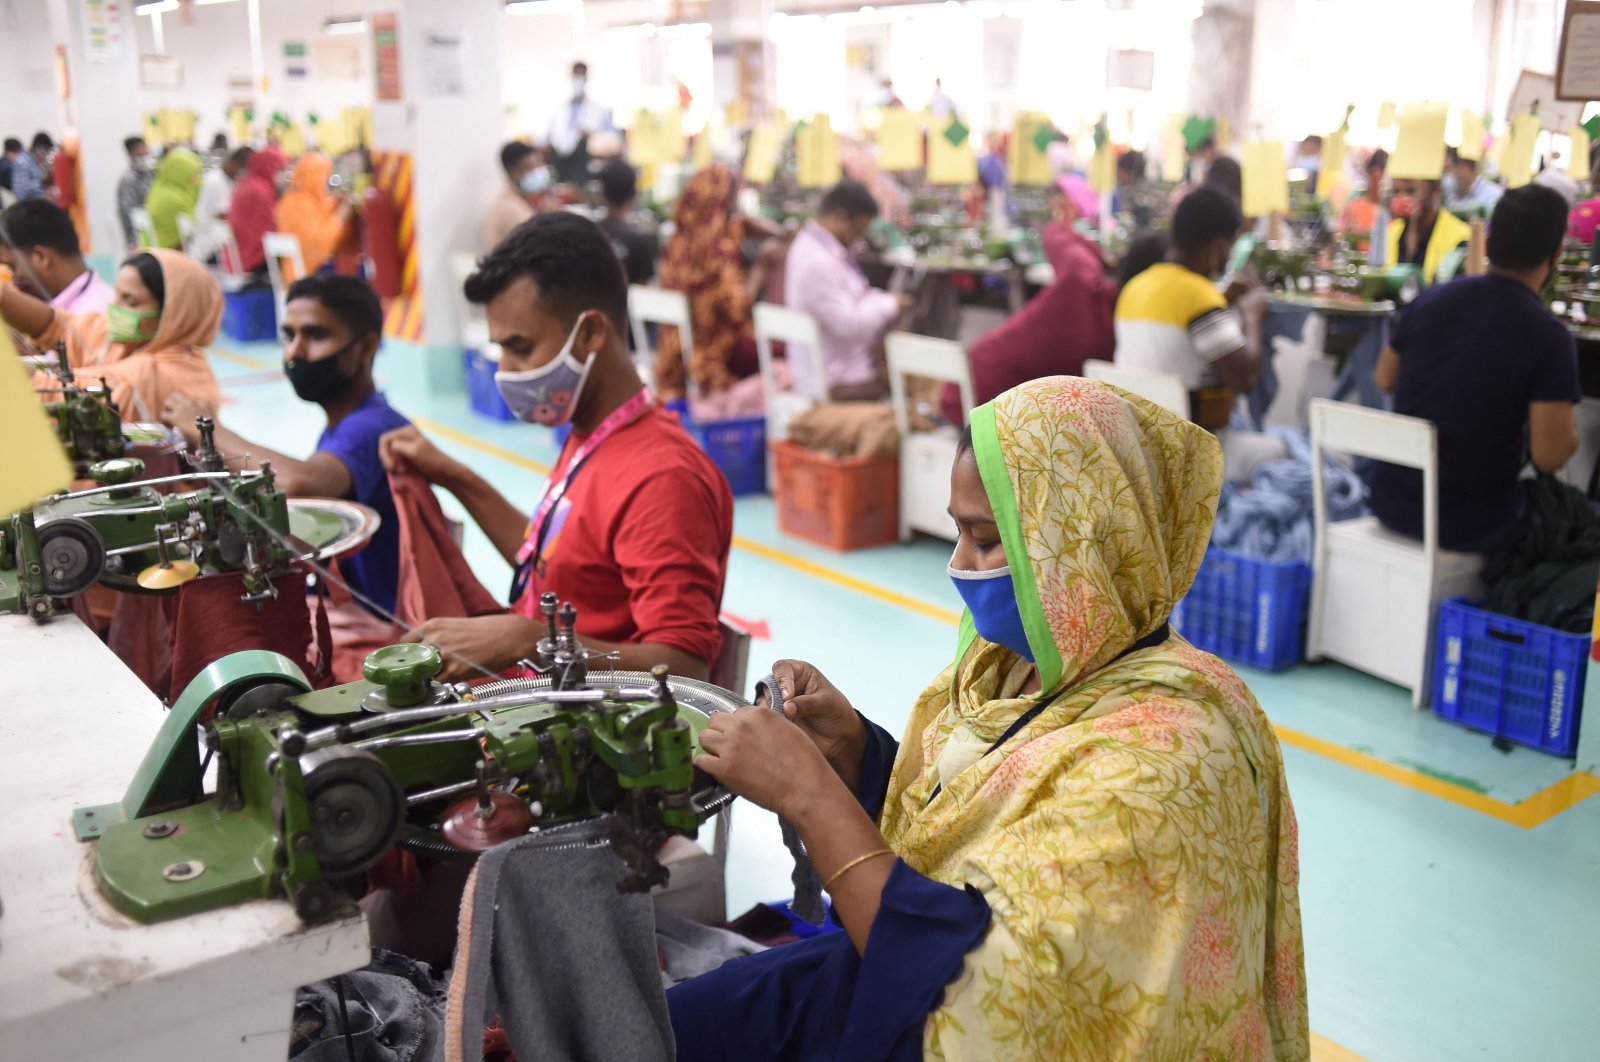 Ruma (R) works in a garment factory in Gazipur, Bangladesh, March 15, 2021. (AFP Photo)